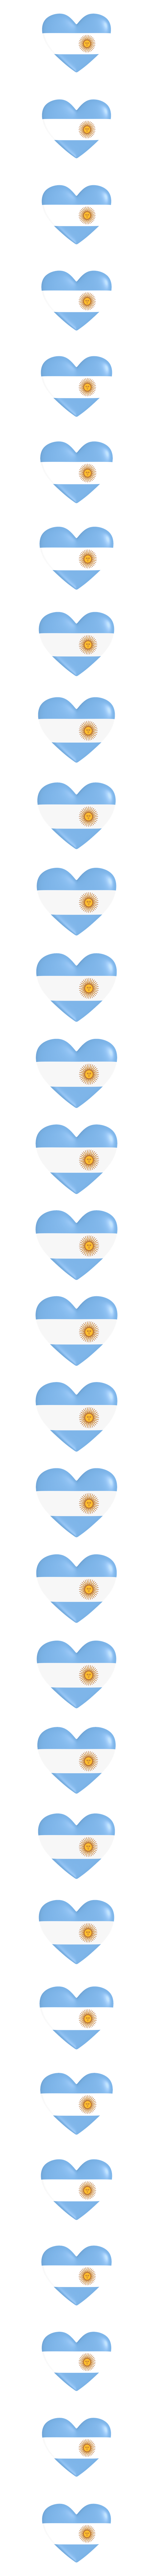 Argentina heart